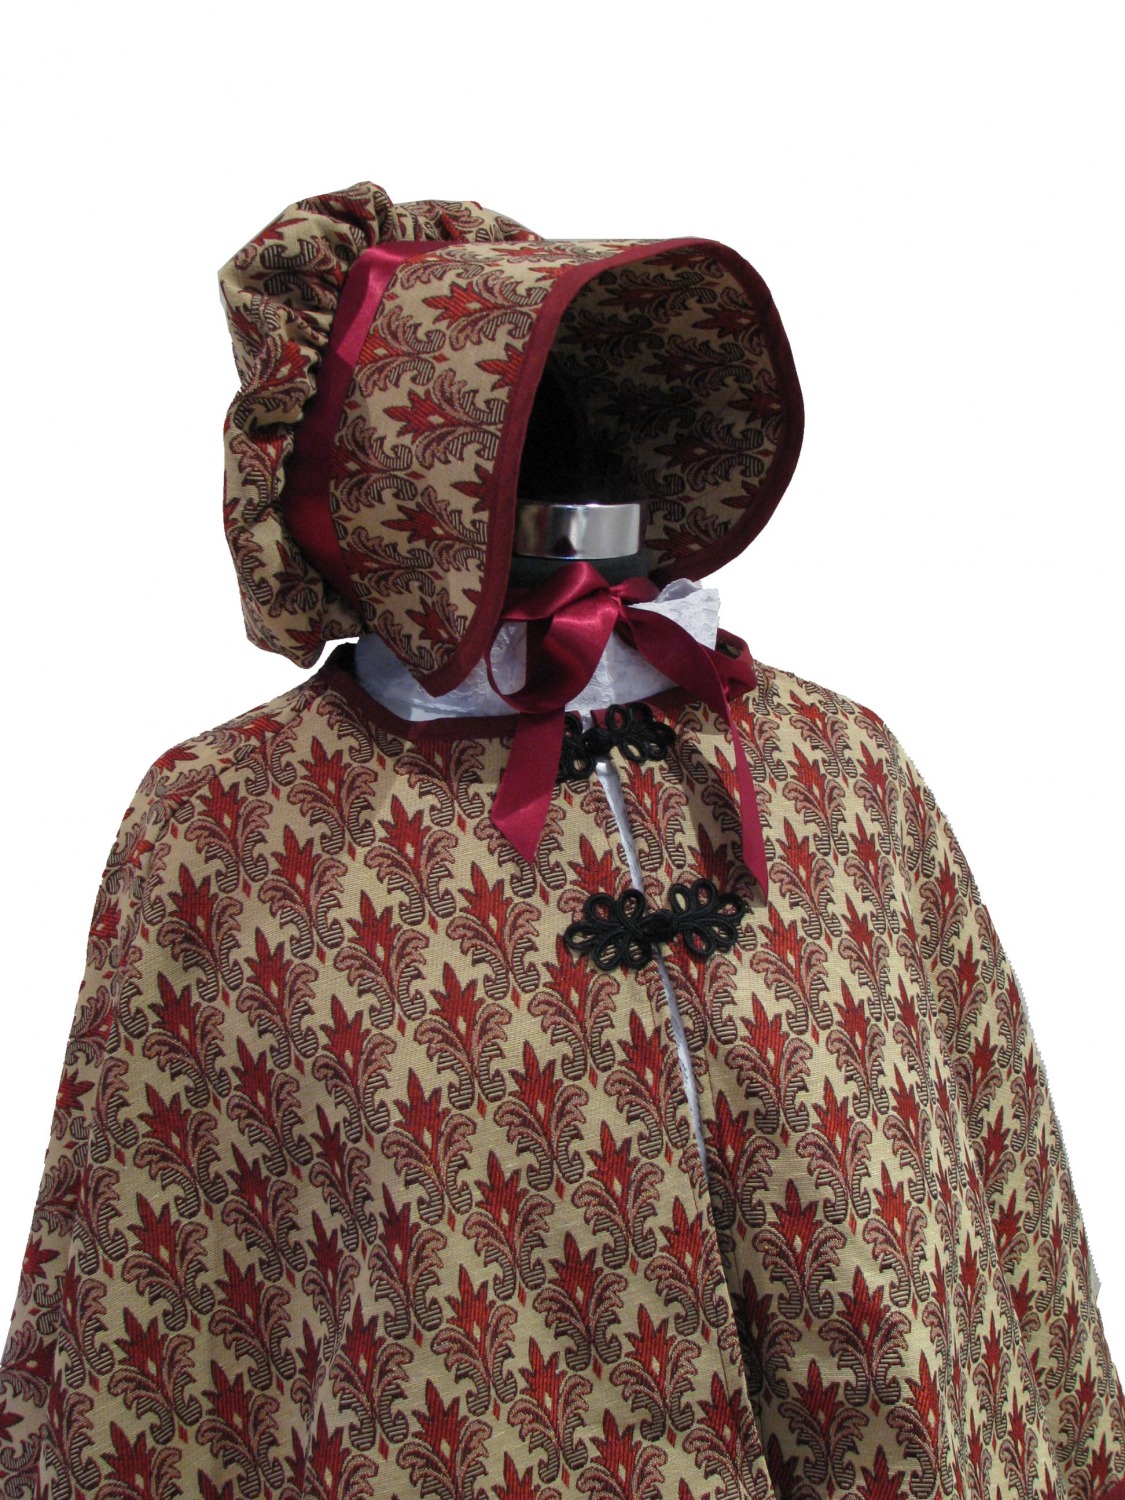 Ladies Victorian Carol Singer School Mistress Costume and Bonnet Size 10 - 12 Image